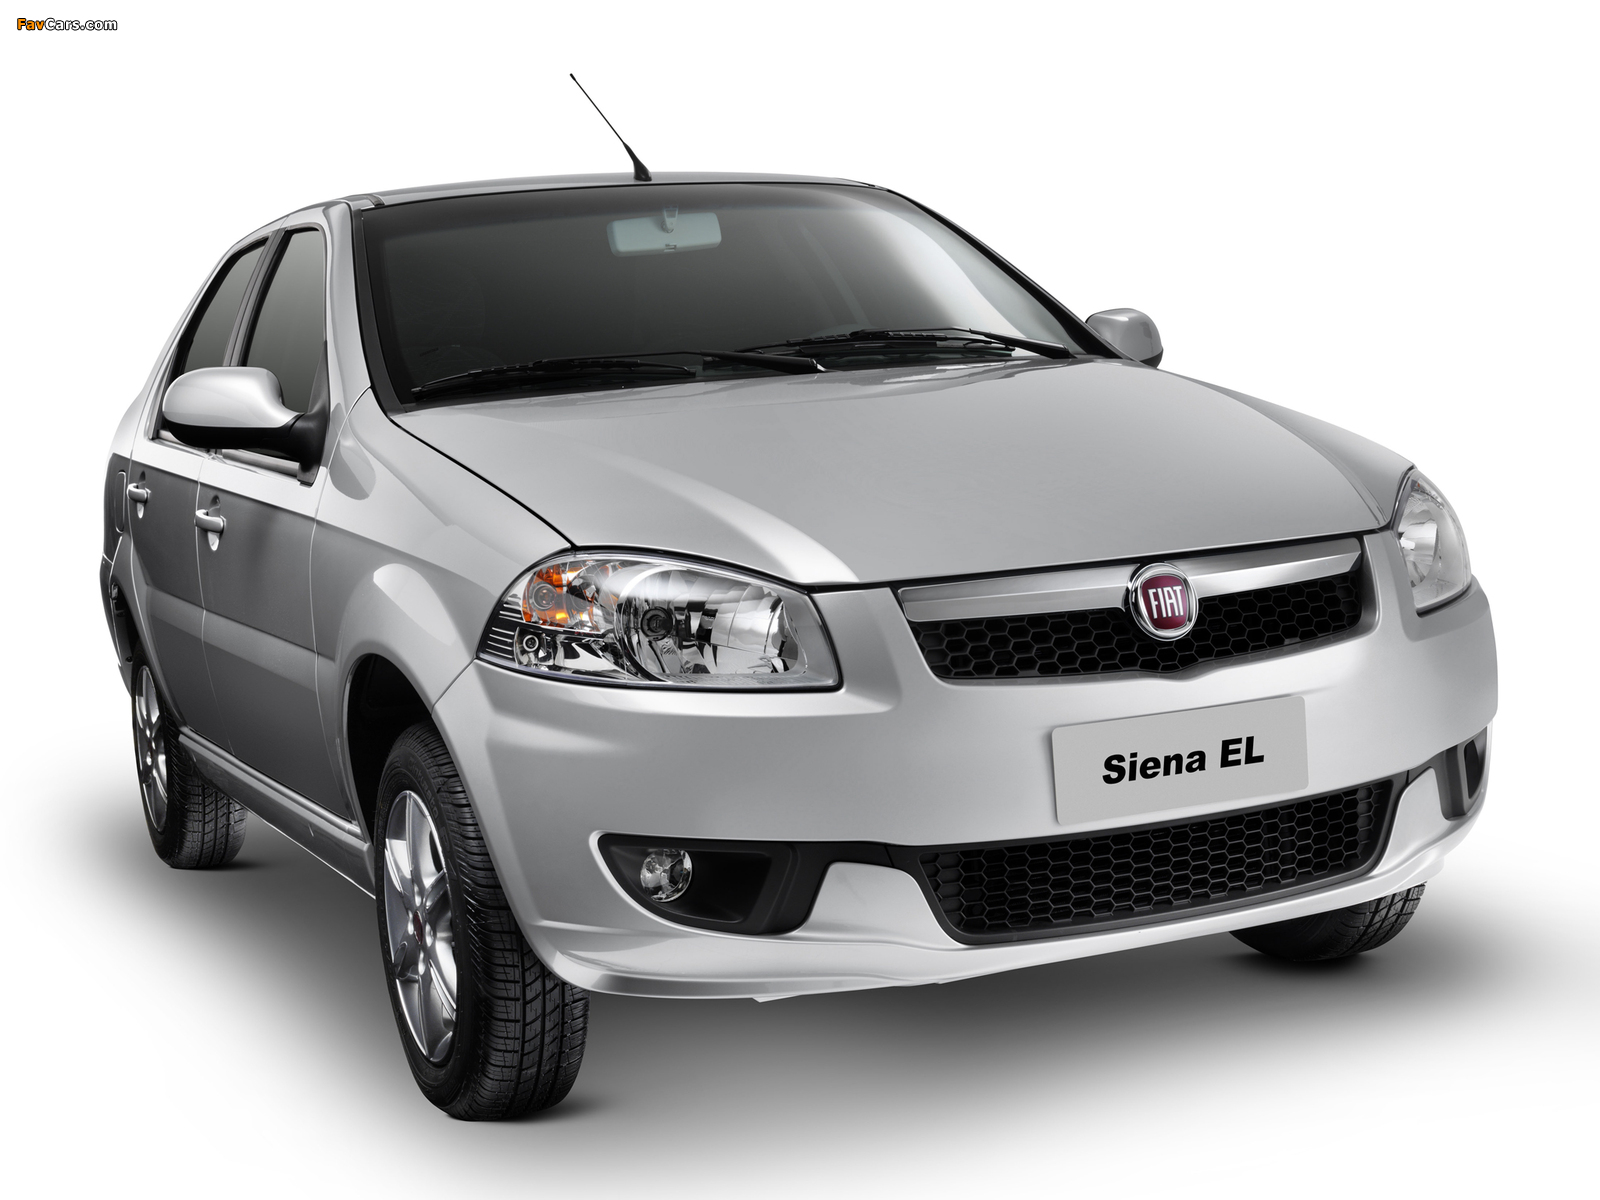 Fiat Siena EL (178) 2012 images (1600 x 1200)